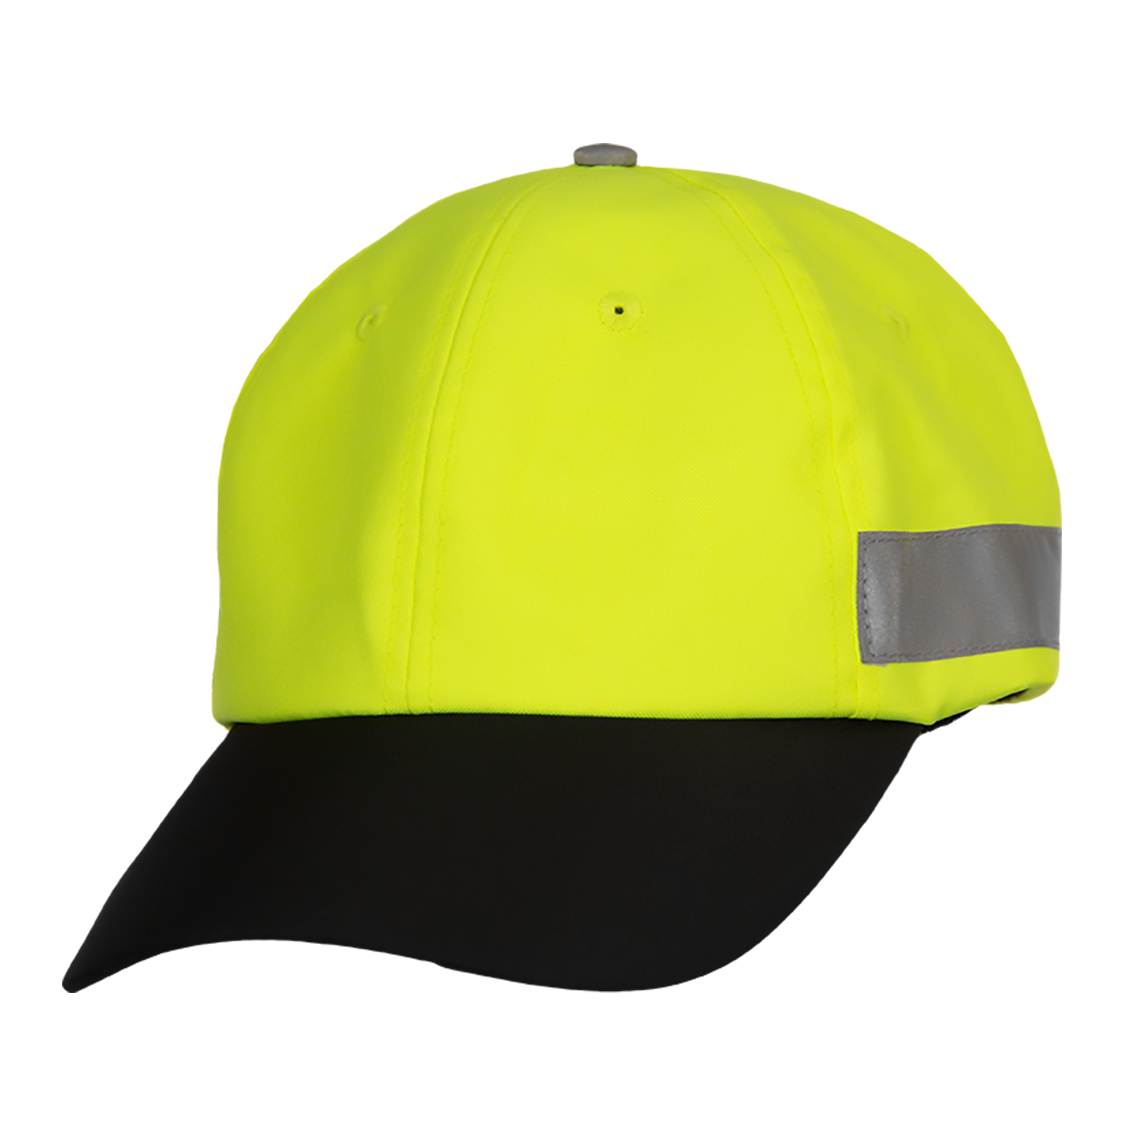 813STLB Safety Baseball Hat: Hi-Vis Lime & Black Cap: Adjustable Cotton Sweatband